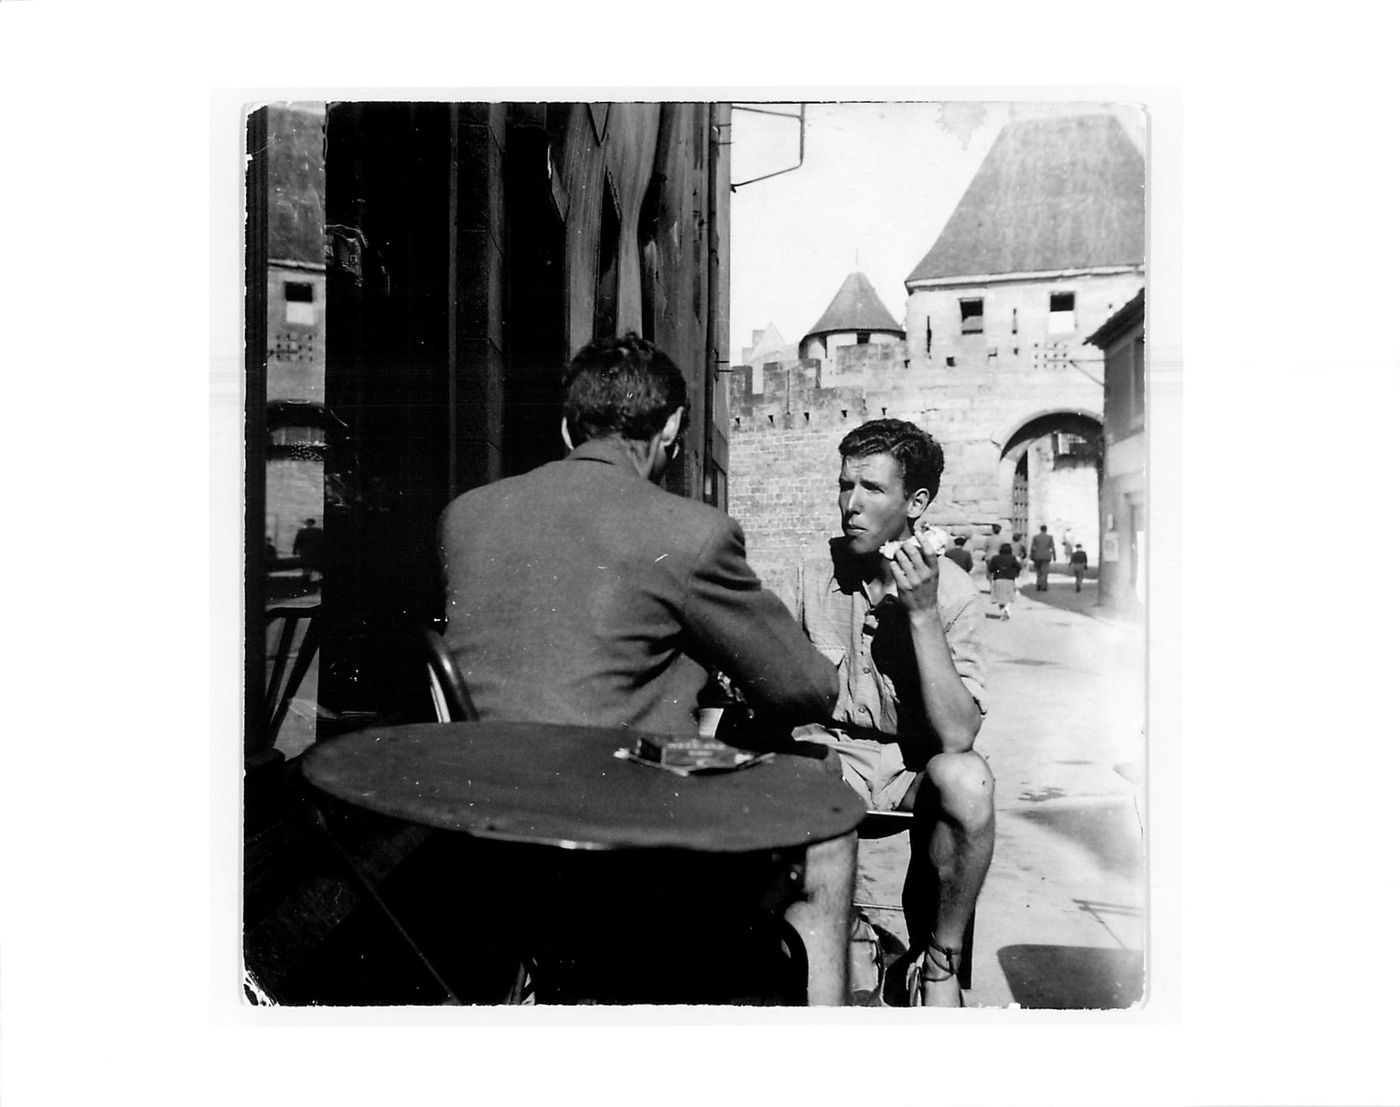 Guy Desbarats and Arthur Erickson in Carcassonne, France